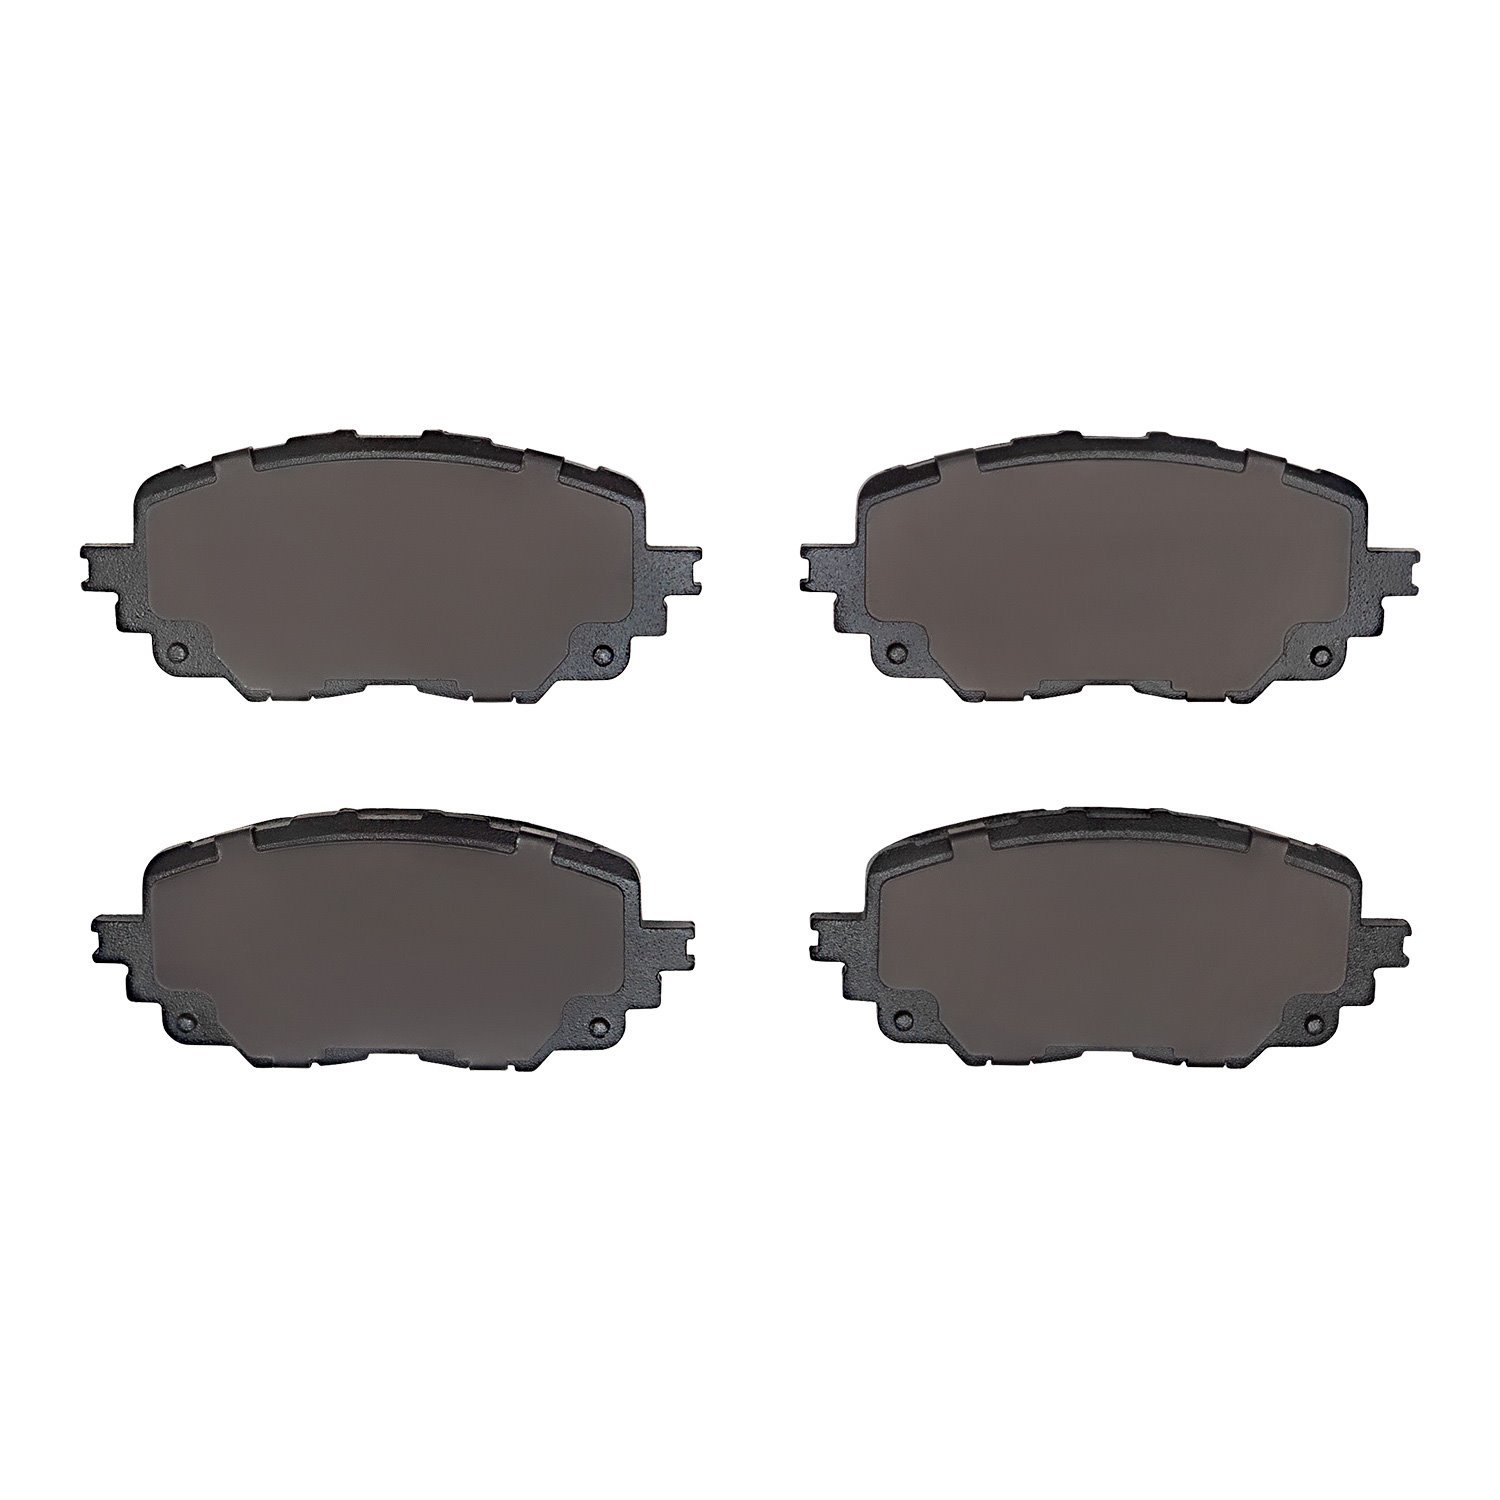 1551-1903-00 5000 Advanced Ceramic Brake Pads, Fits Select Multiple Makes/Models, Position: Front